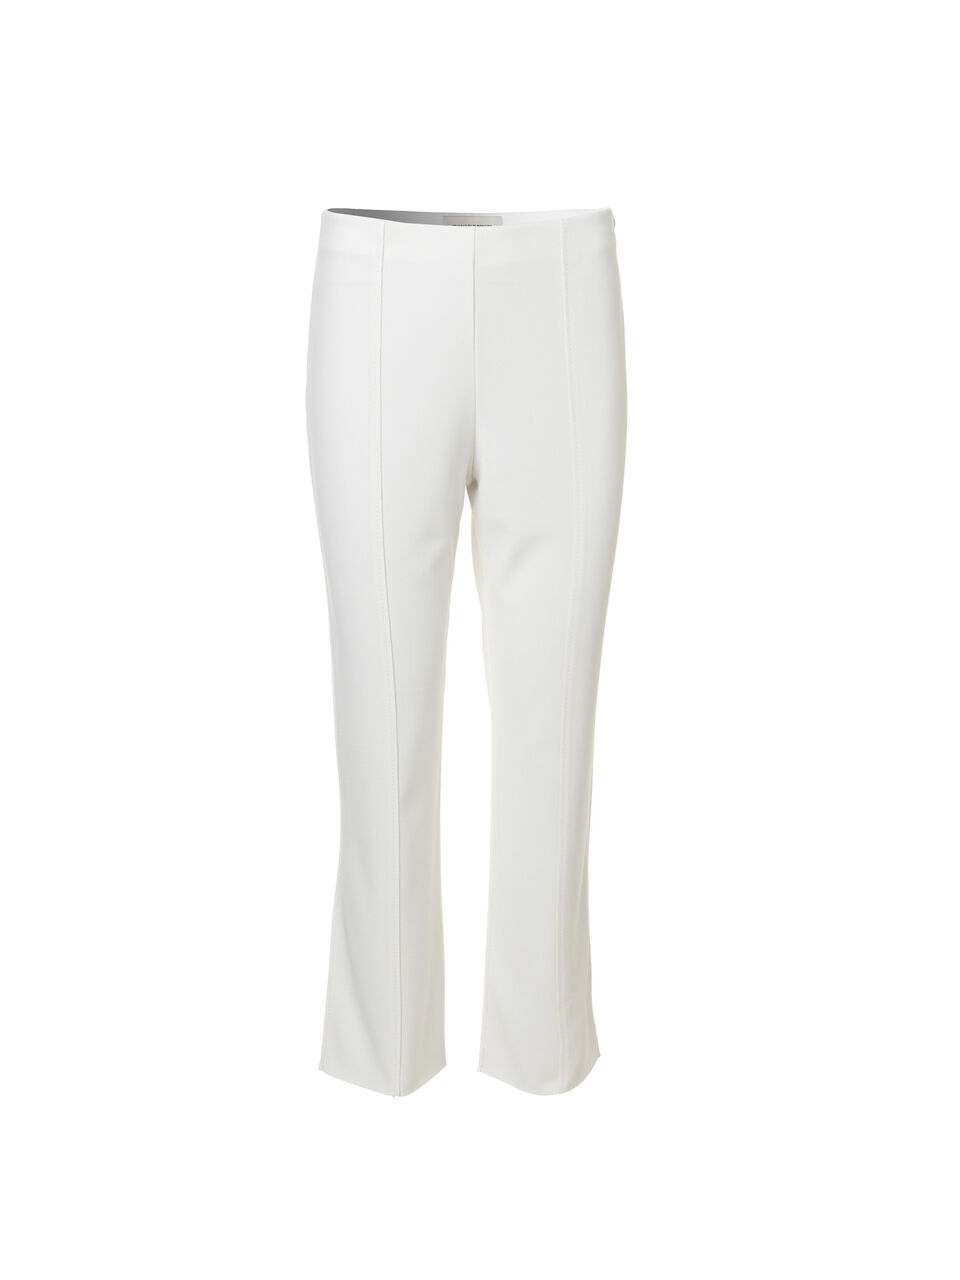 fusion Belyse Lam Viggie trousers - Buy online